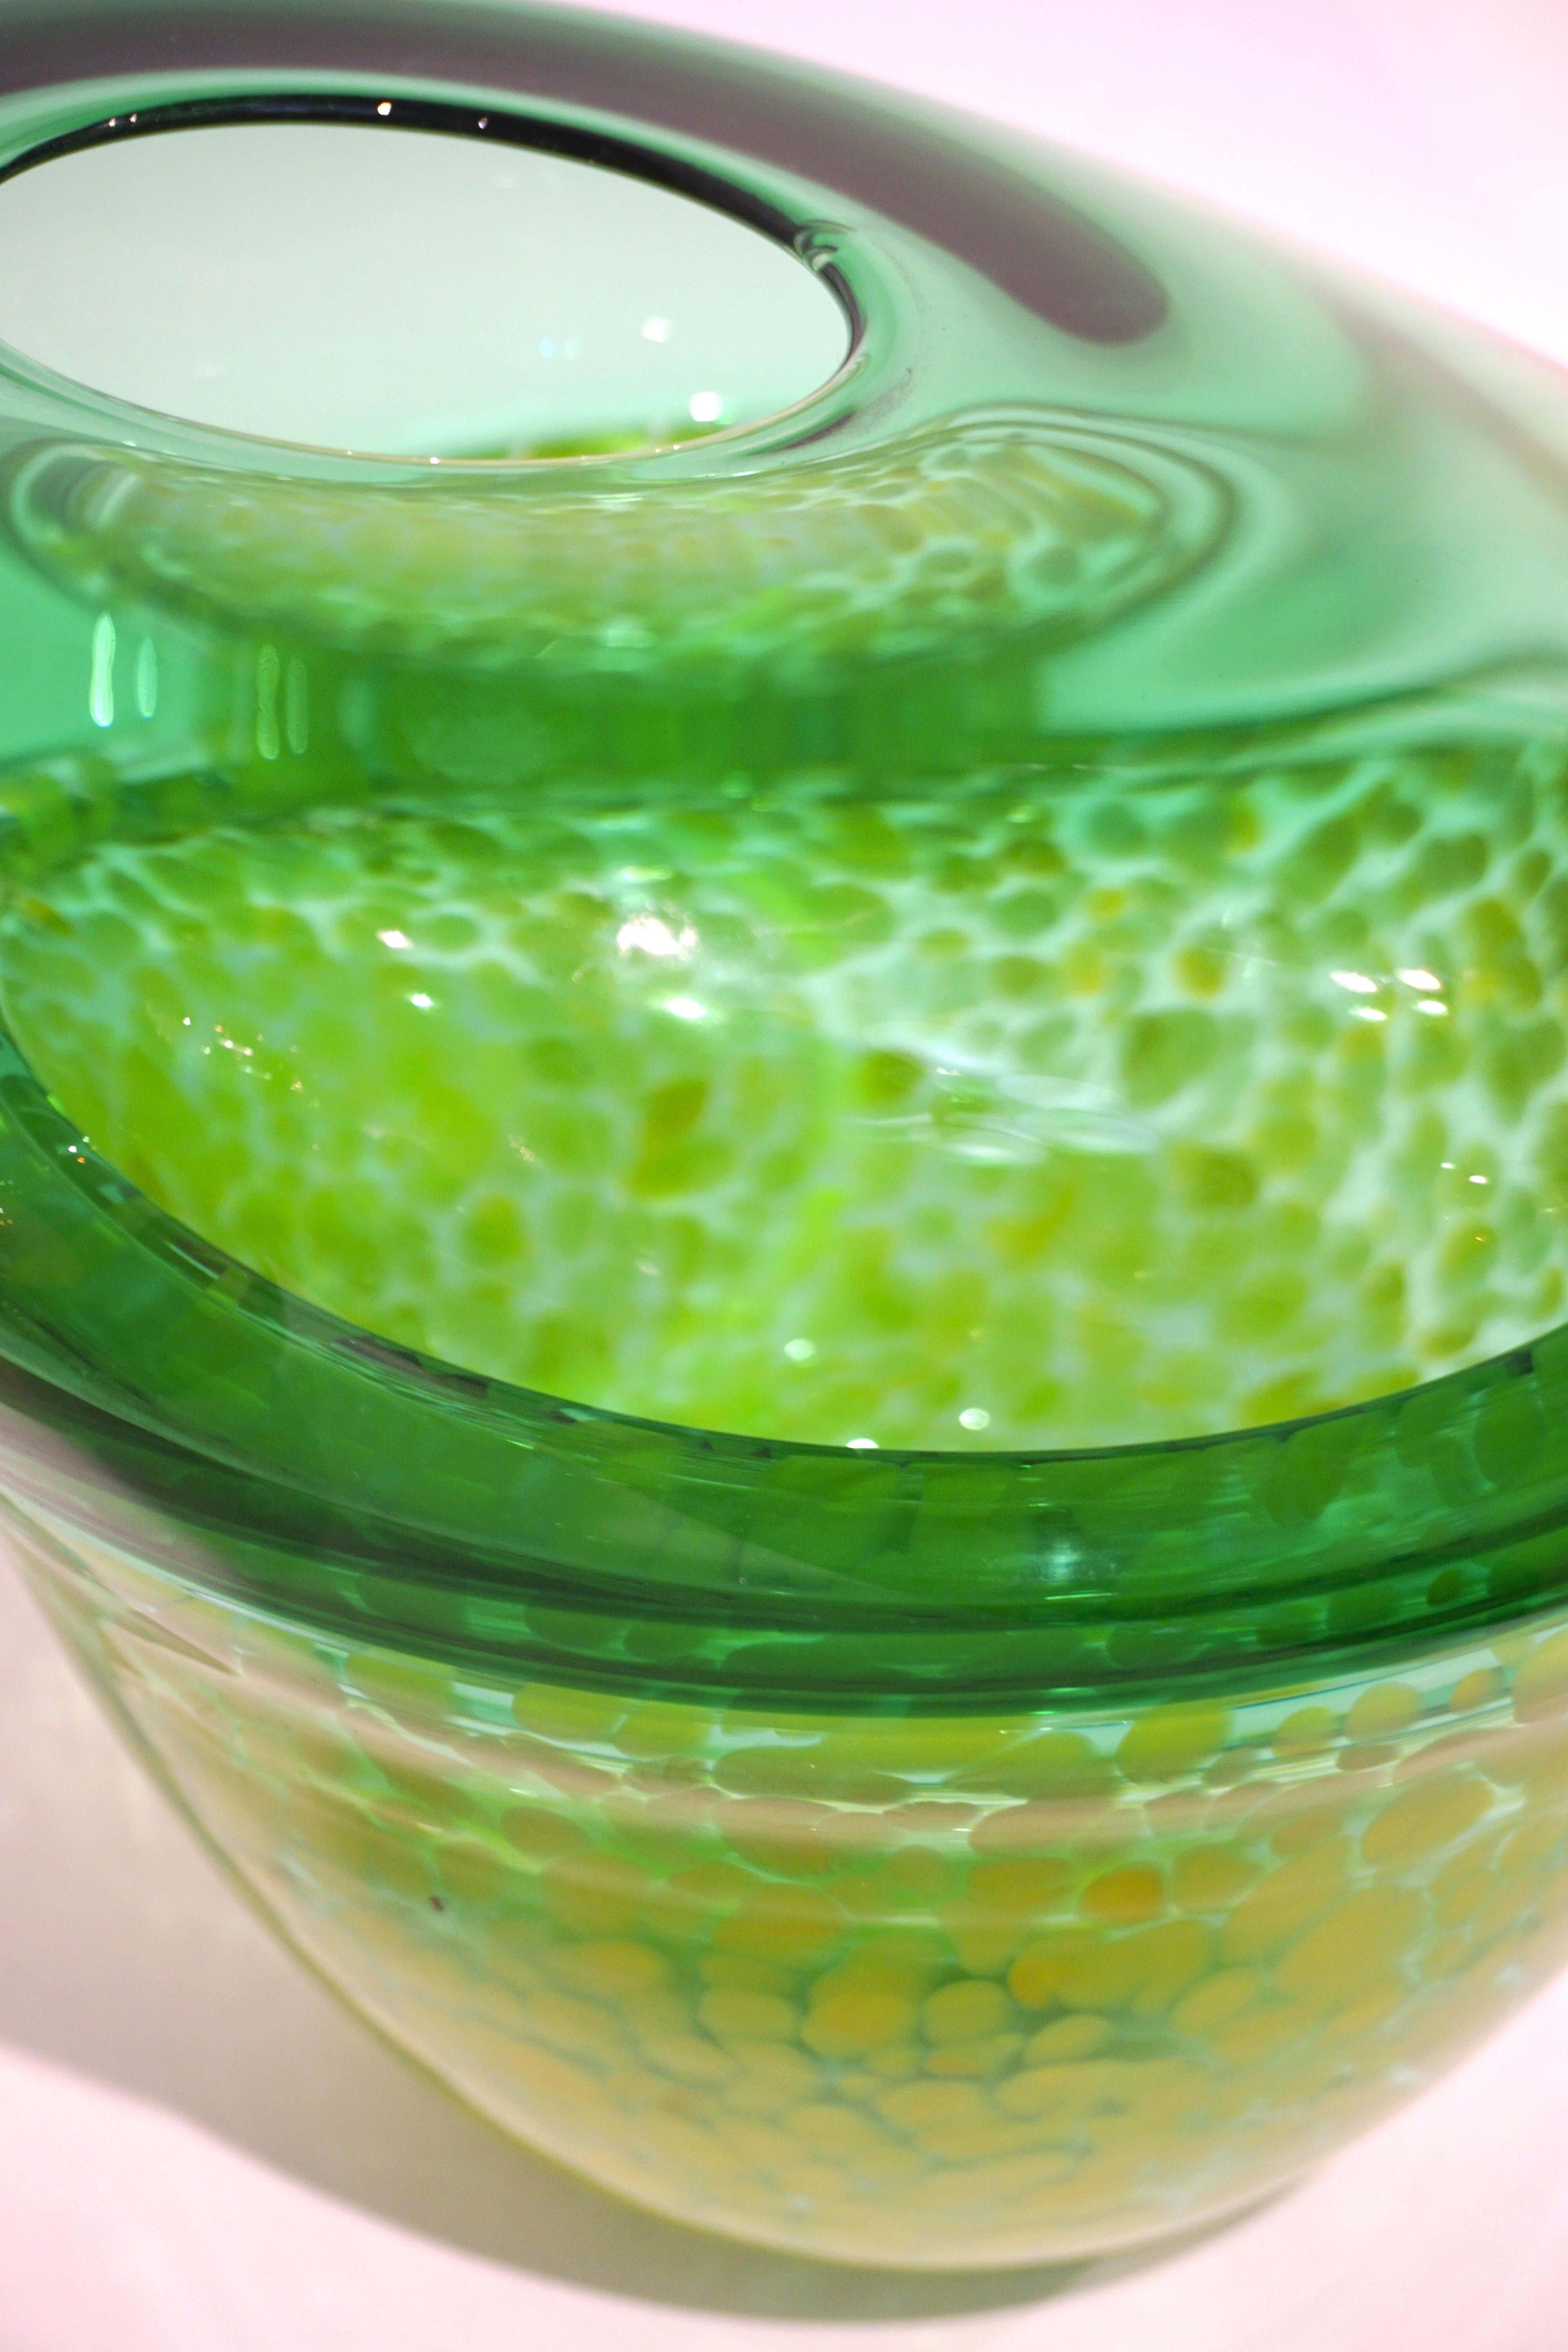 Organic Modern Hilton McConnico by Formia 1990s Italian Green Spotted Murano Art Glass Vase